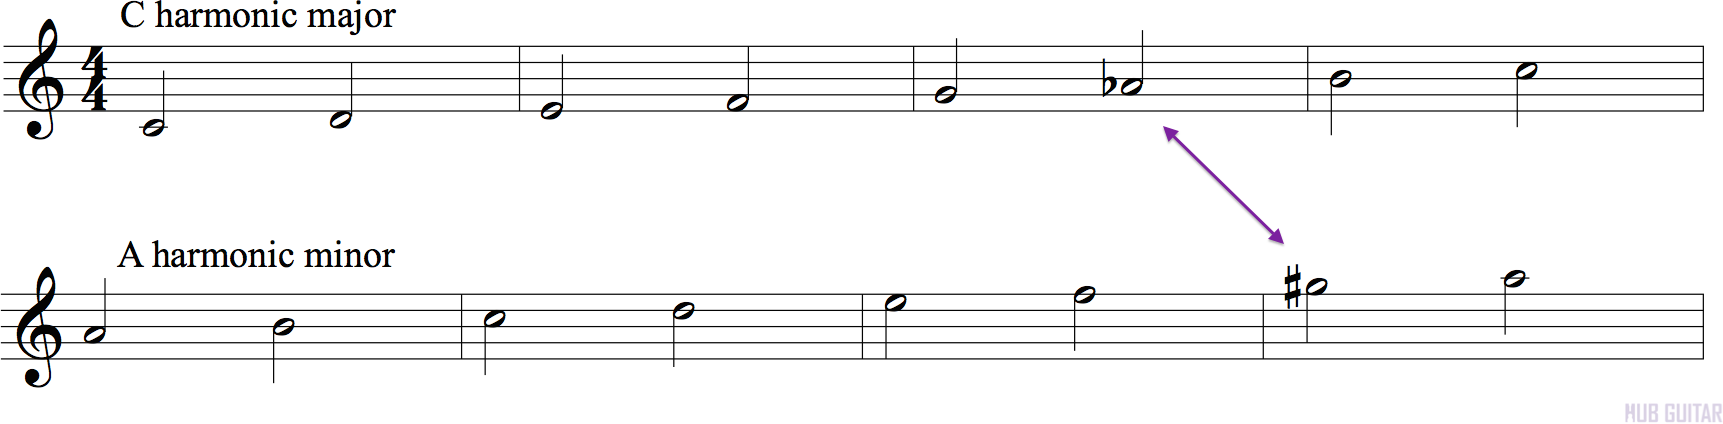 Harmonic major example compared to the relative (harmonic) minor.